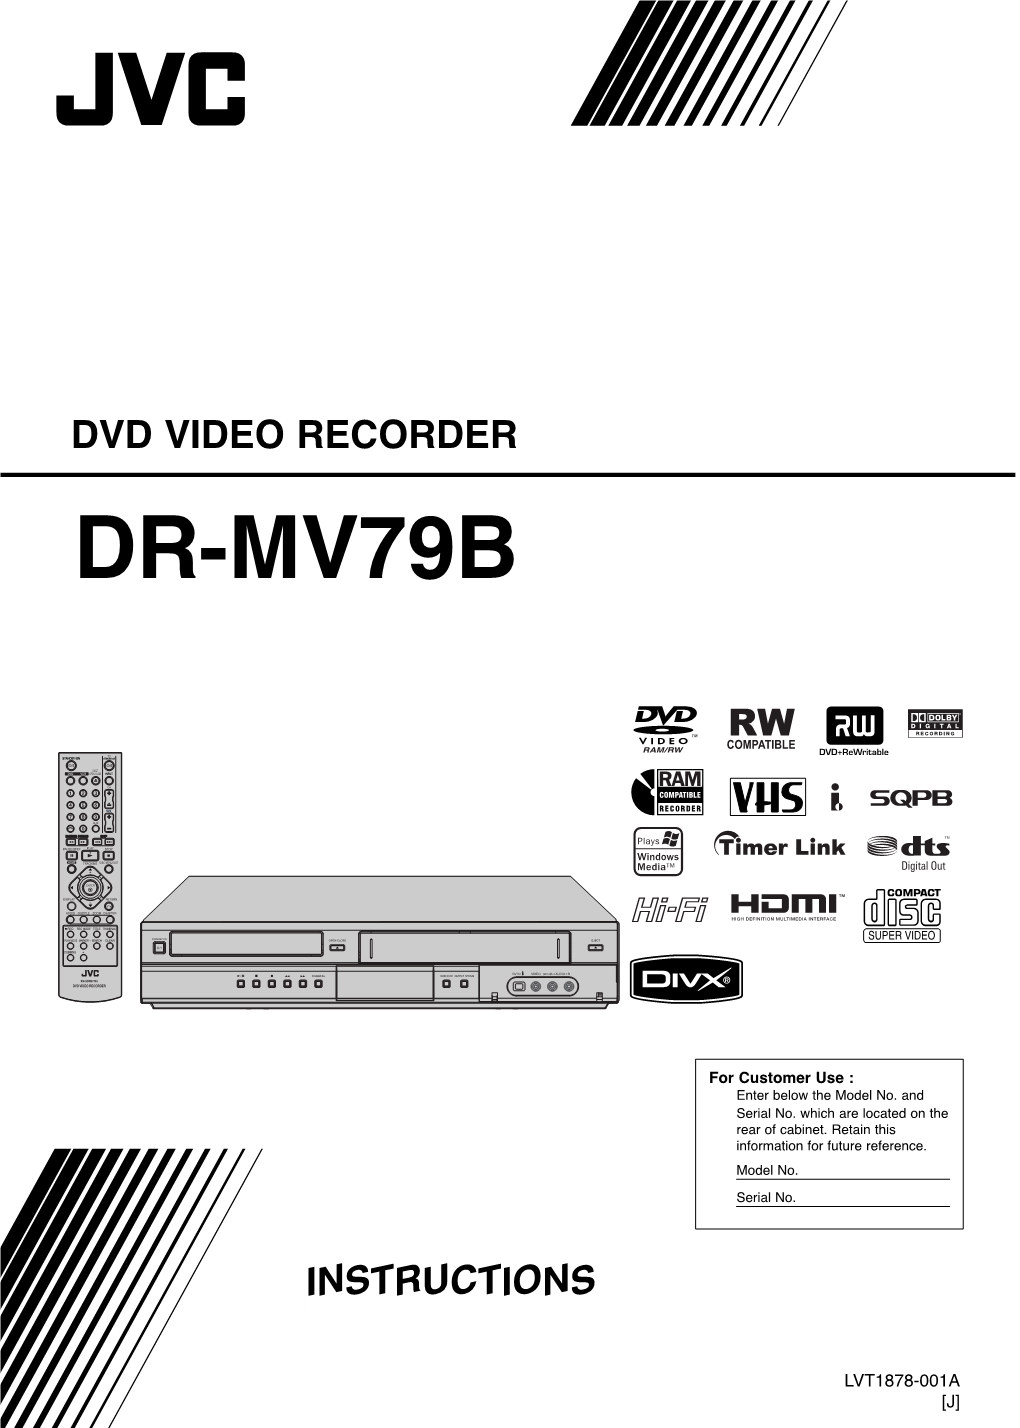 Dvd Video Recorder Instructions